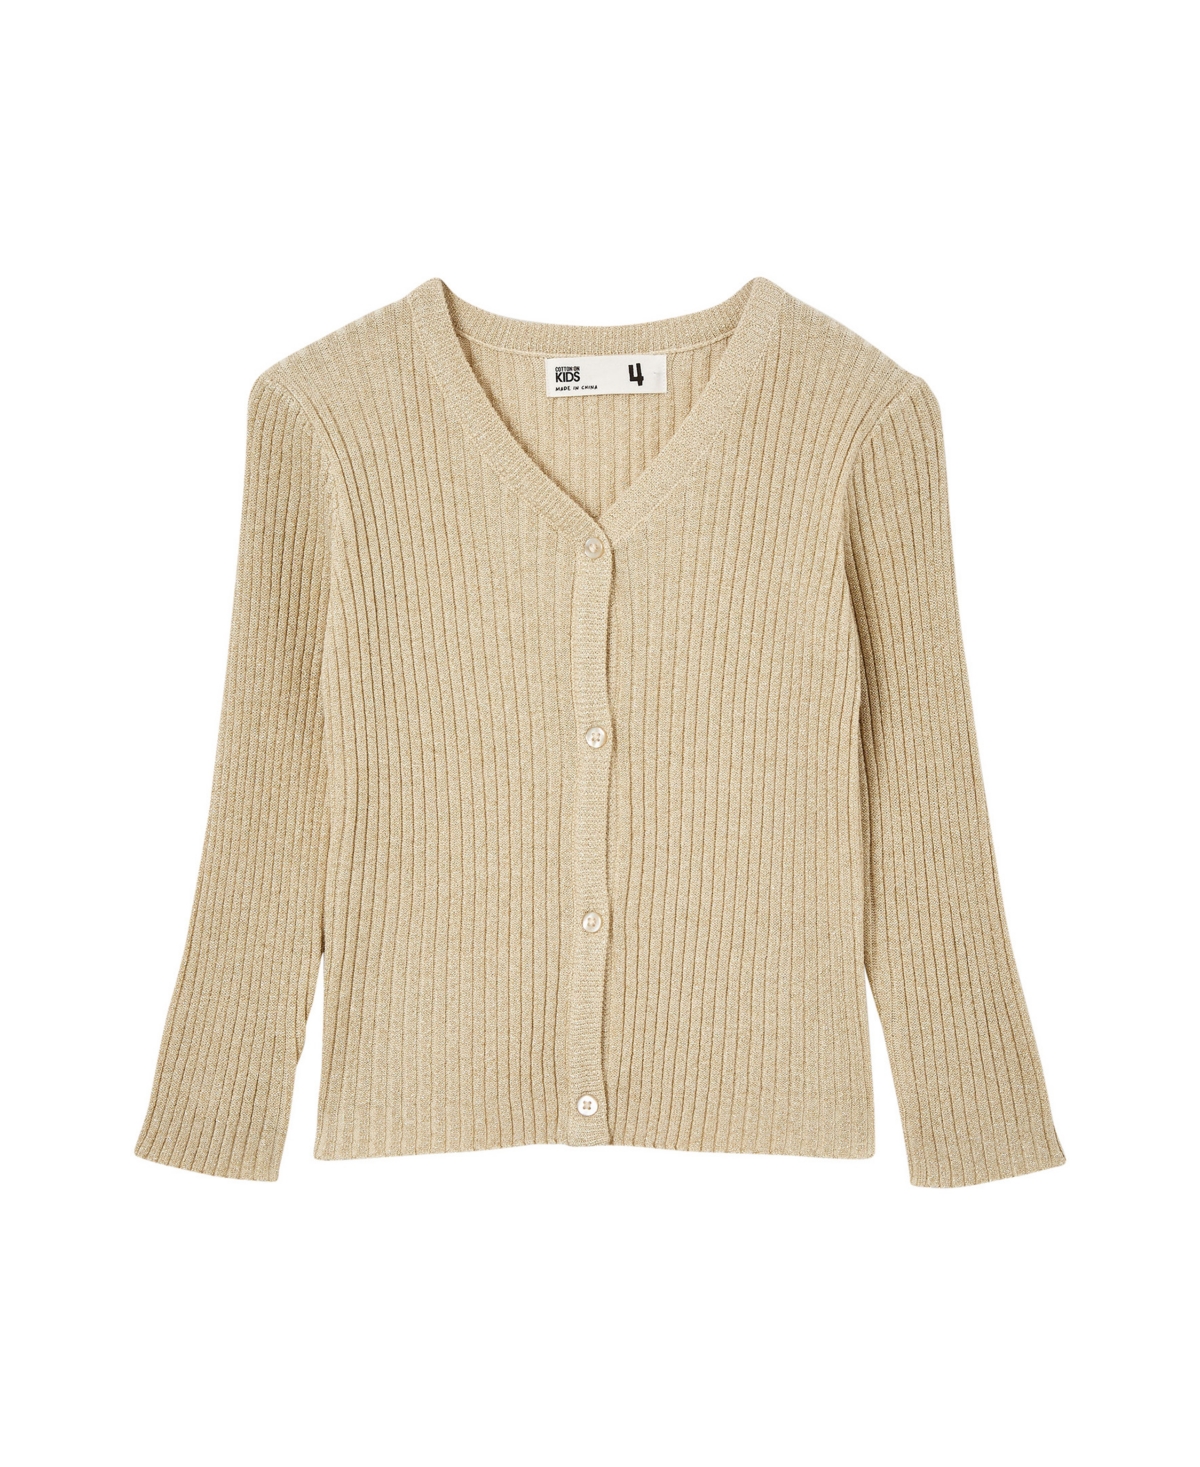 Cotton On Babies' Toddler Girls Molly Cardigan Sweater In Dark Vanilla Gold Sparkle